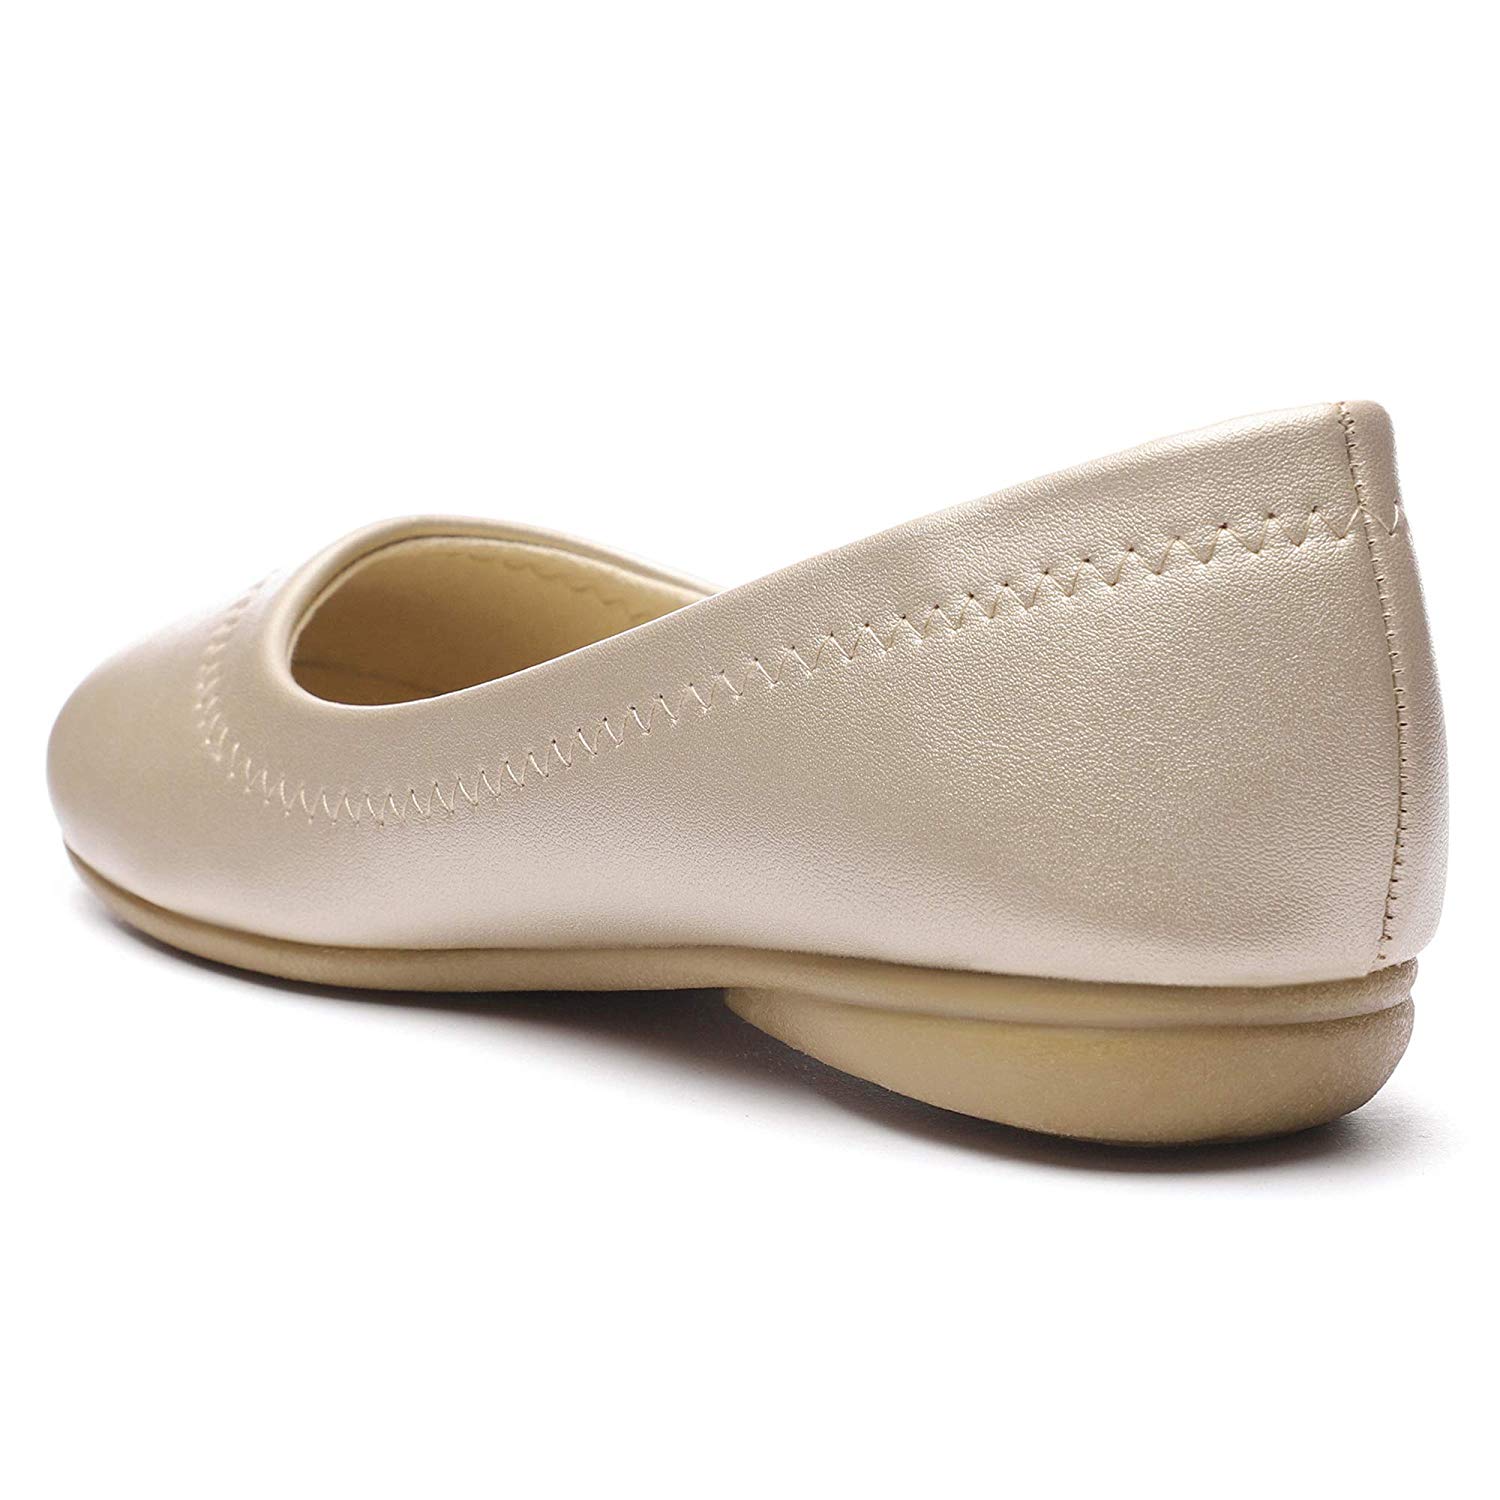 CINAK Flats Shoes Women- Slip-on Ballet Comfort Walking Classic, Gold ...